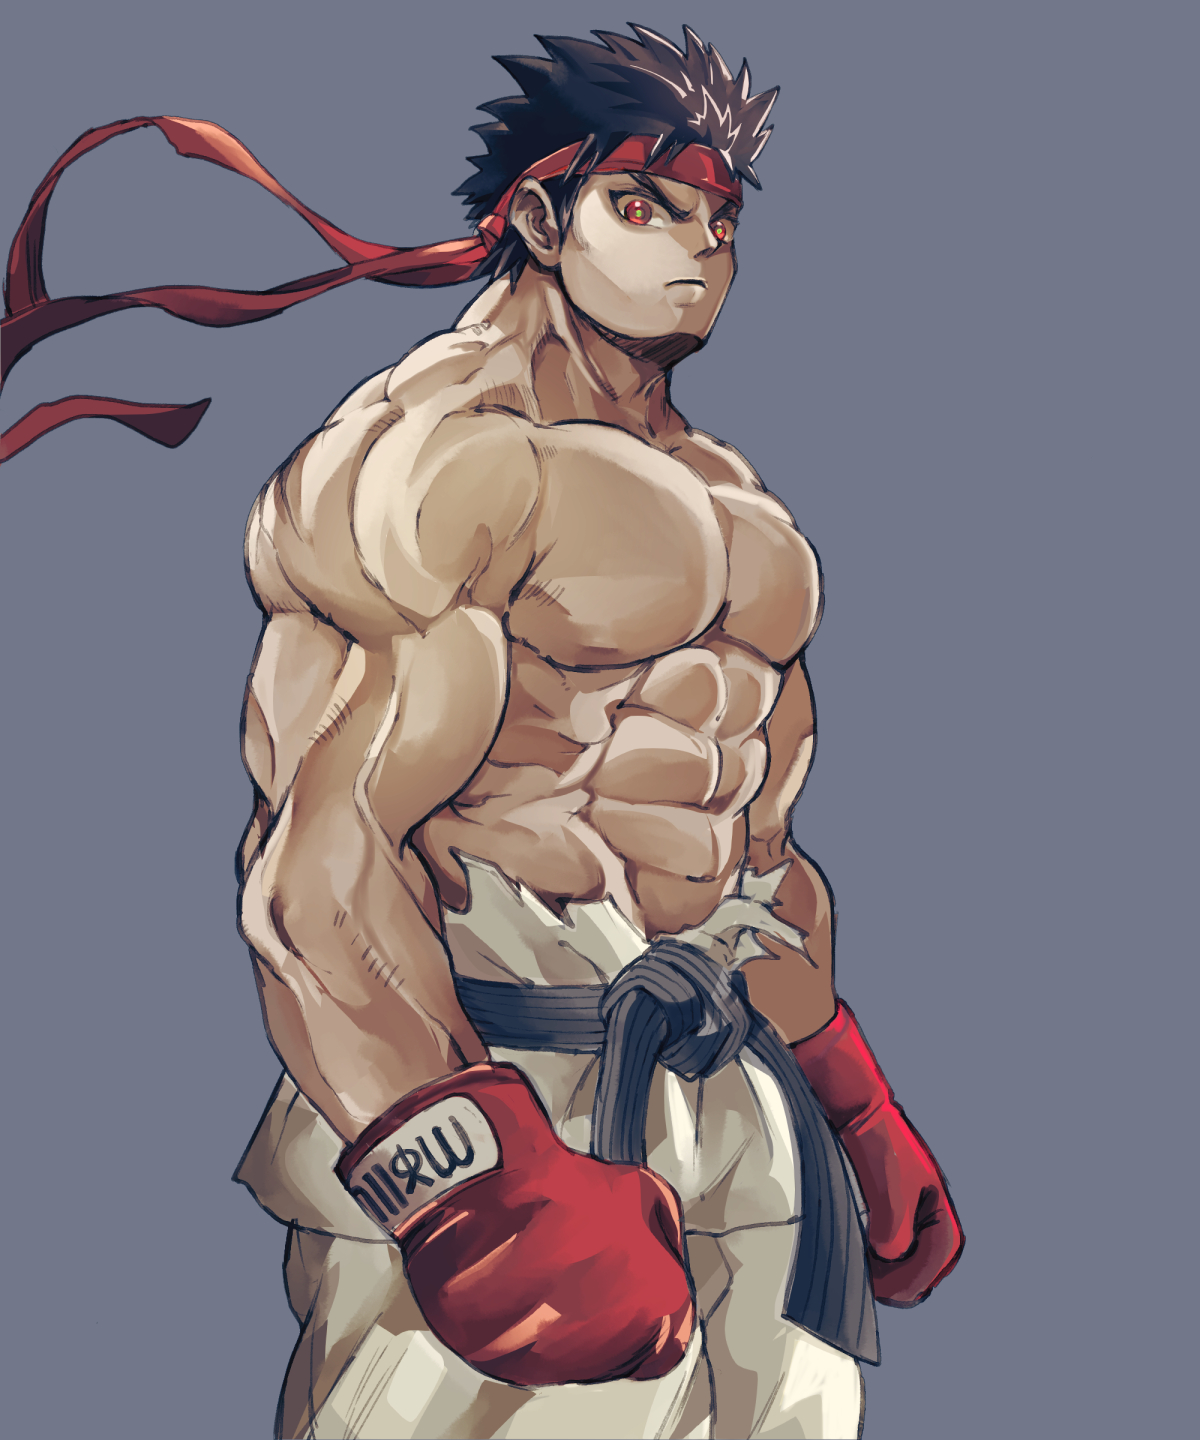 Ryu Street fighter Alpha 